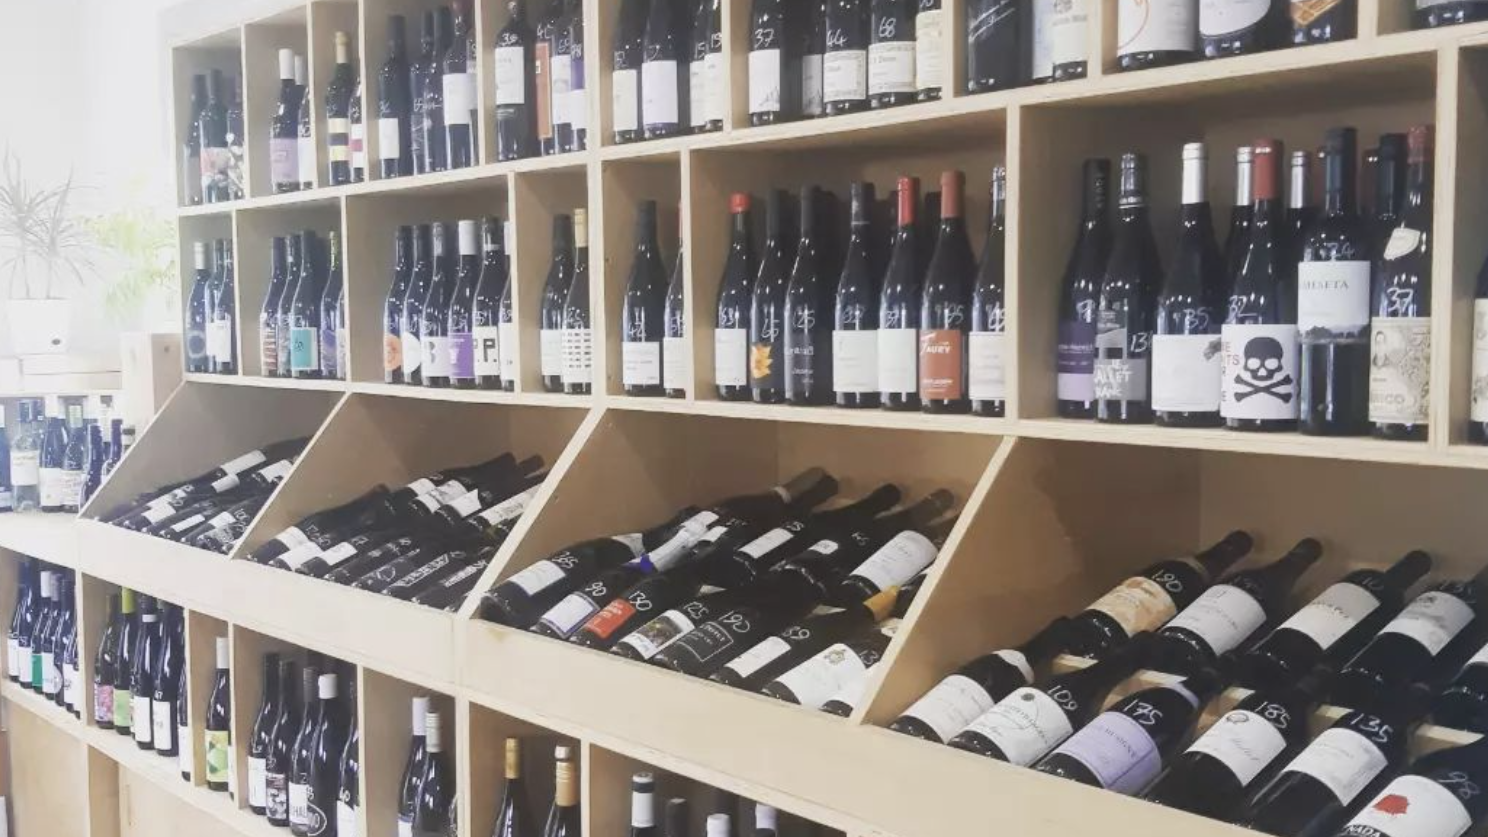 Grampians Wine Cellar Collection